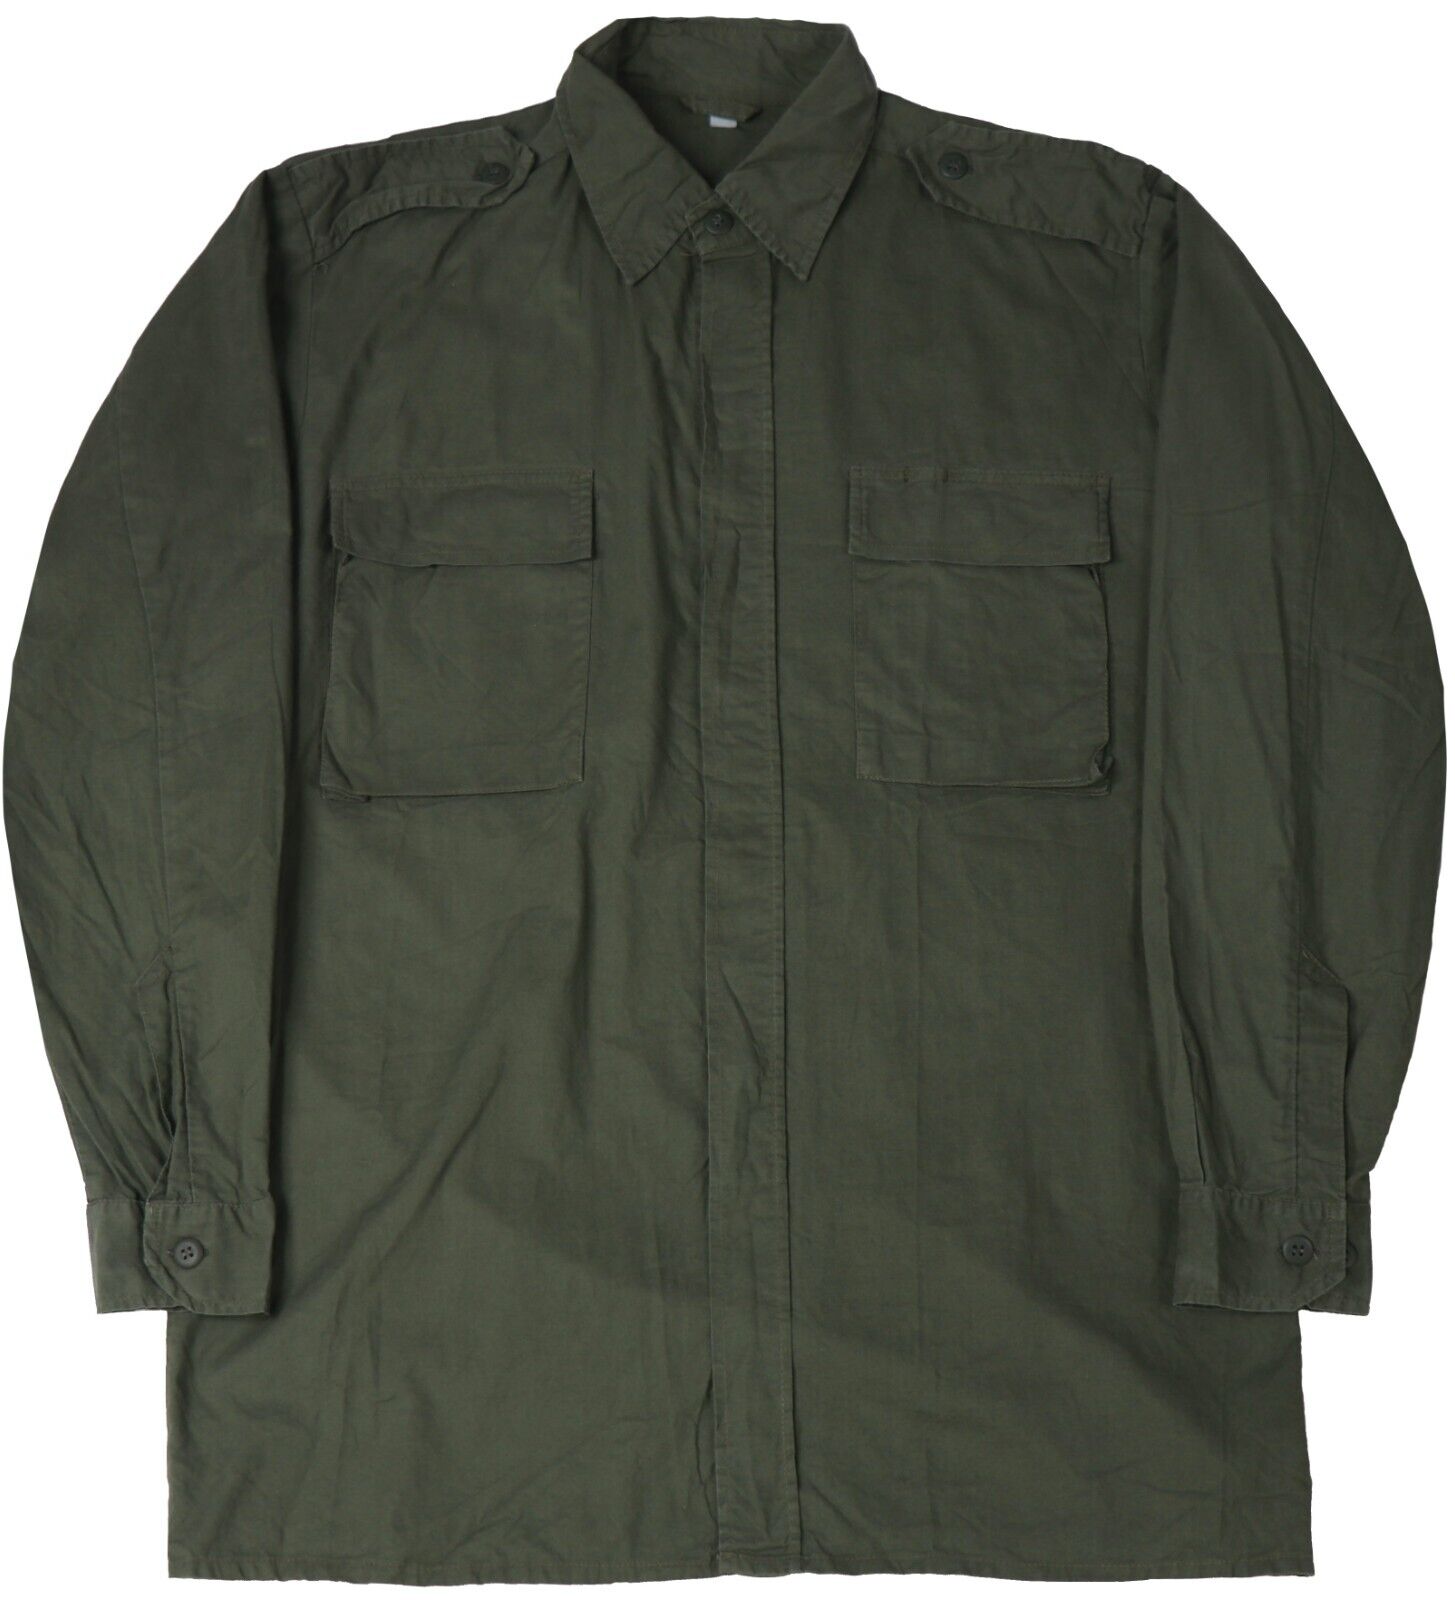 Large (43/44) - Croatian Military Field Shirt Olive Green BDU